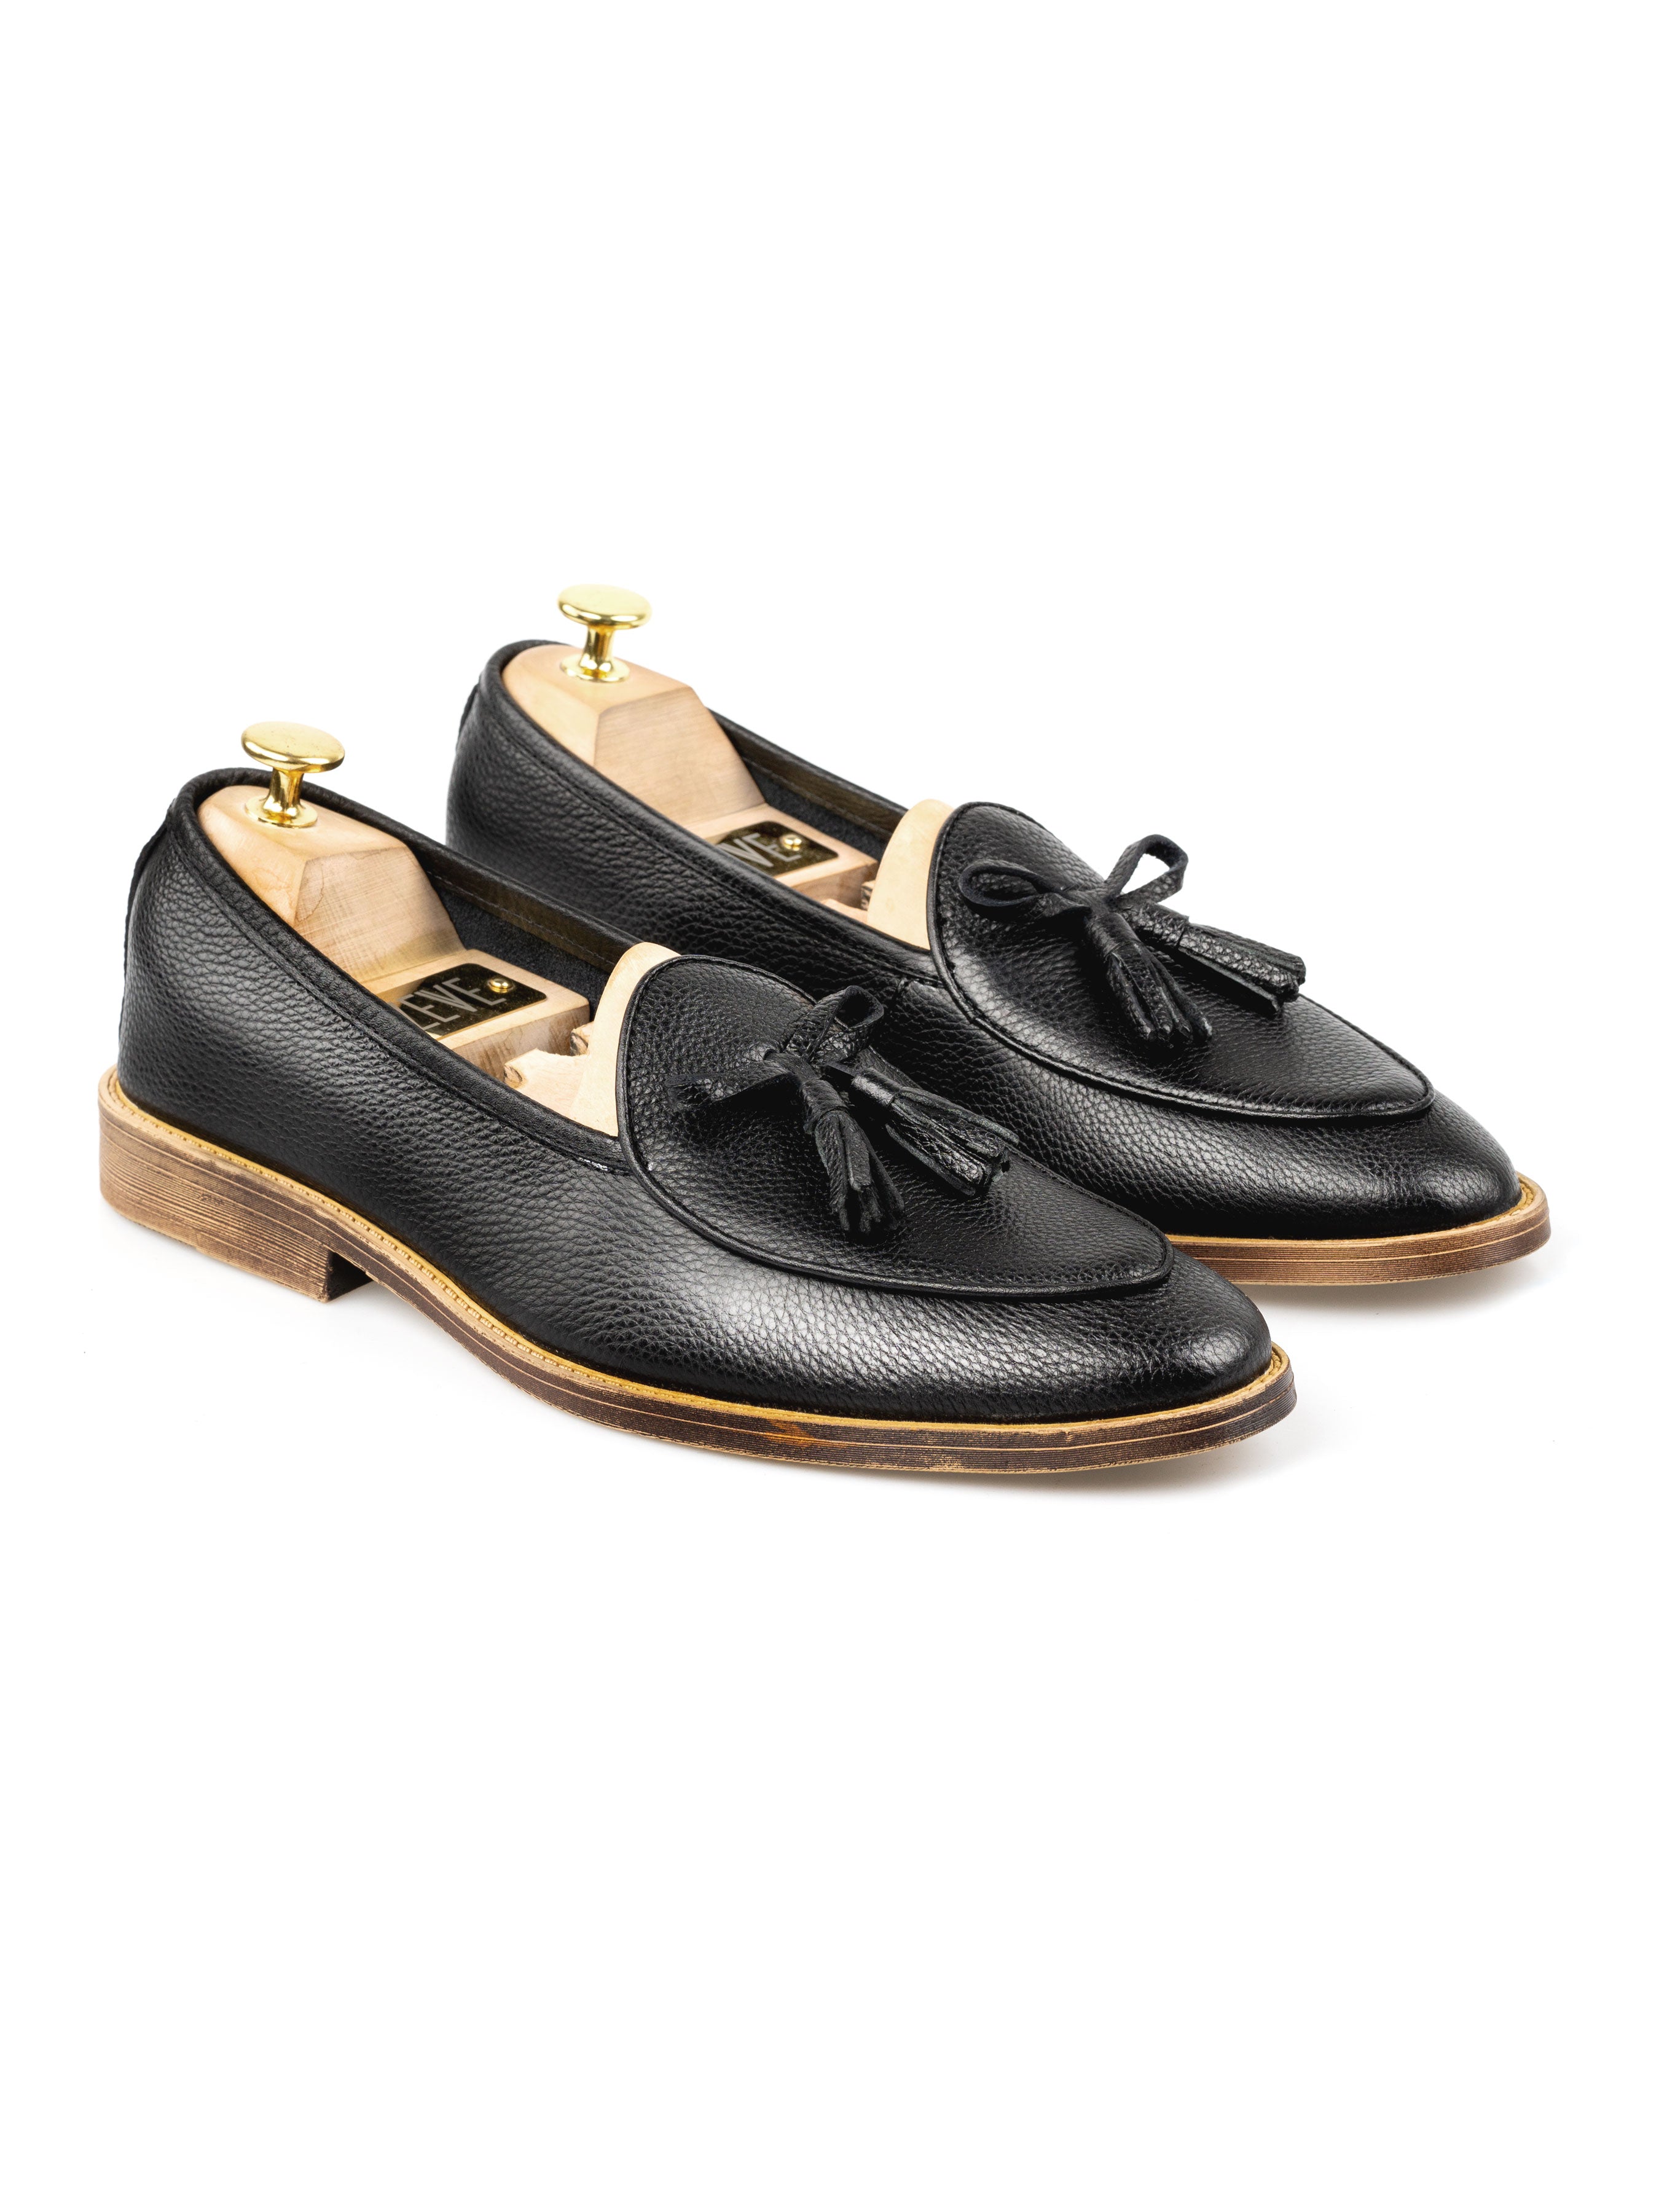 Belgian Loafer with Ribbon Tassel - Black Pebble Grain Leather (Flexi-Sole) - Zeve Shoes